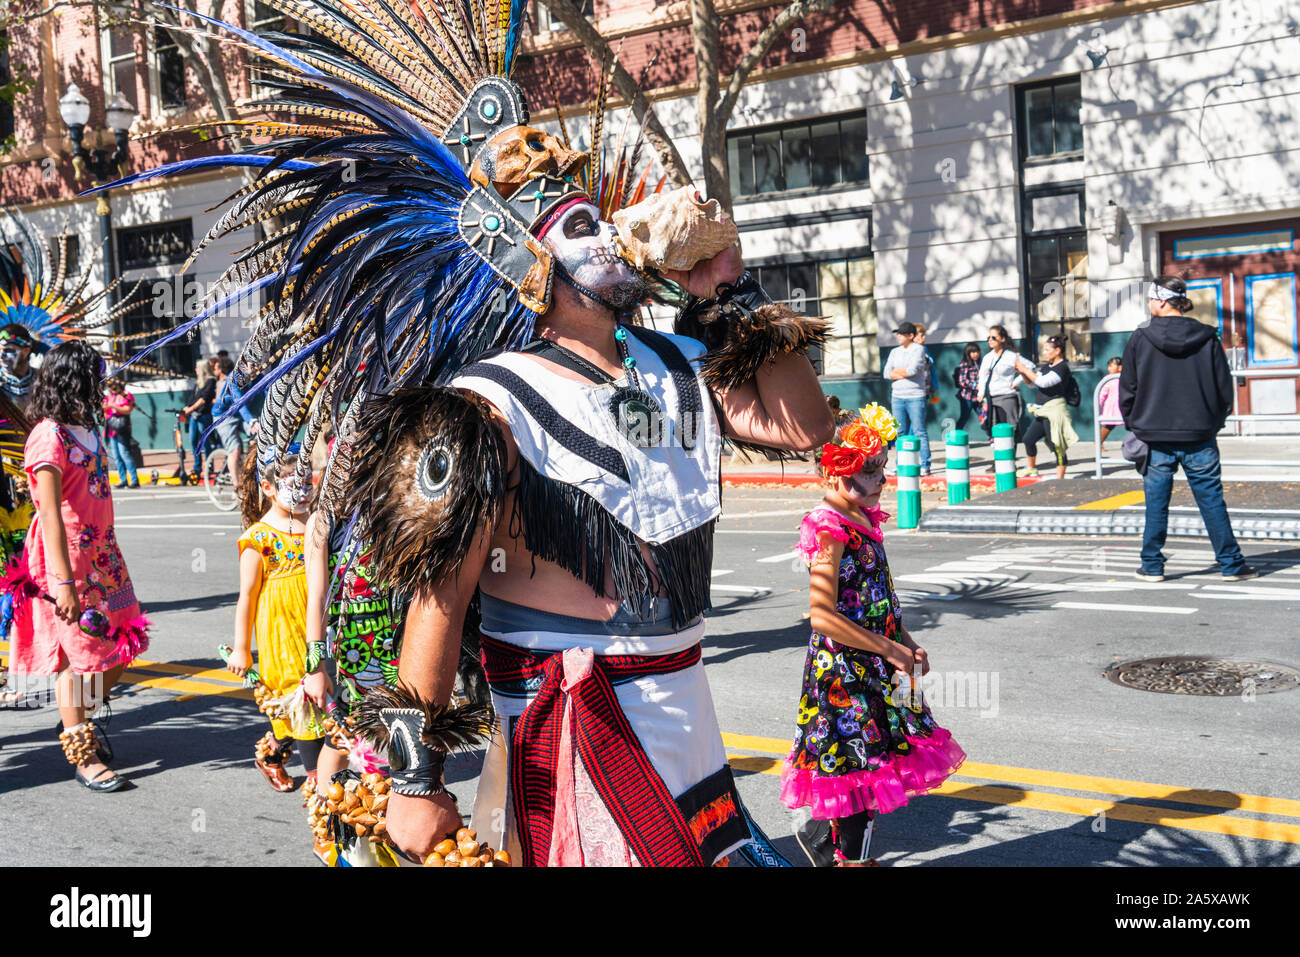 Oct 20, 2019 San Jose / CA / USA - Les participants à la Fête des Morts (Dia de Los Muertos) procession ayant lieu dans le sud de San Francisco Bay ; Capull Banque D'Images